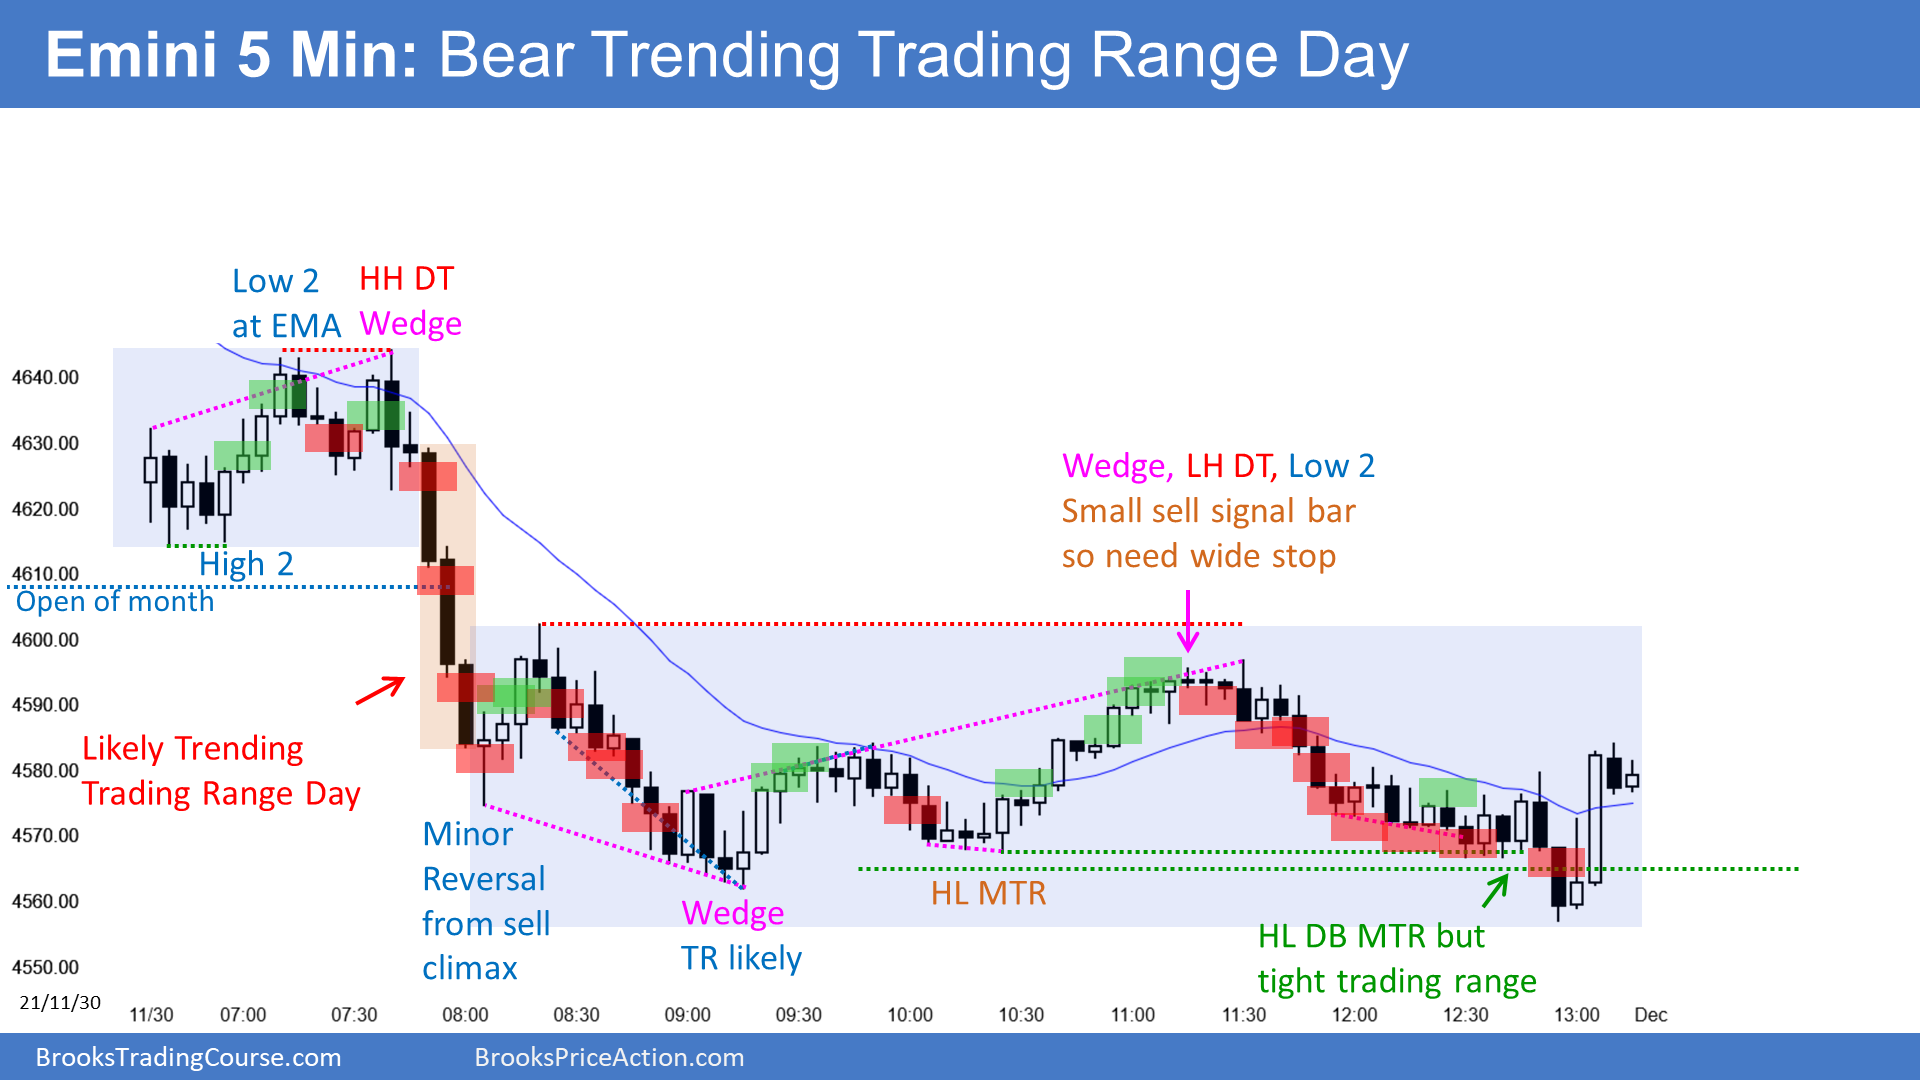 E-mini wedge rally to EMA, then trending trading range day